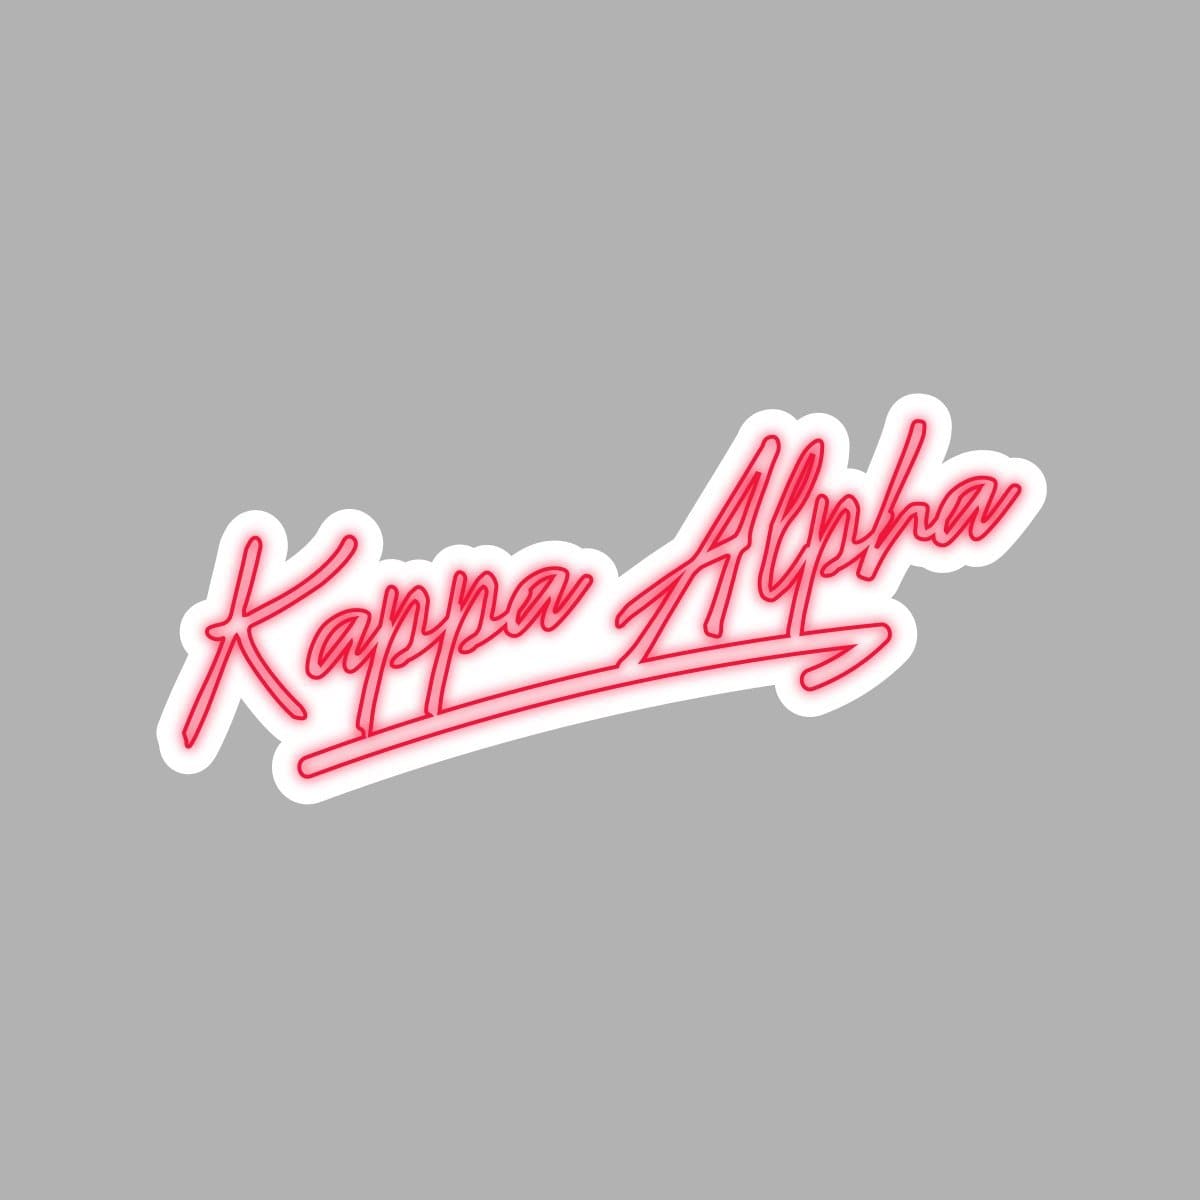 Kappa Alpha Neon Sticker | Kappa Alpha Order | Promotional > Stickers